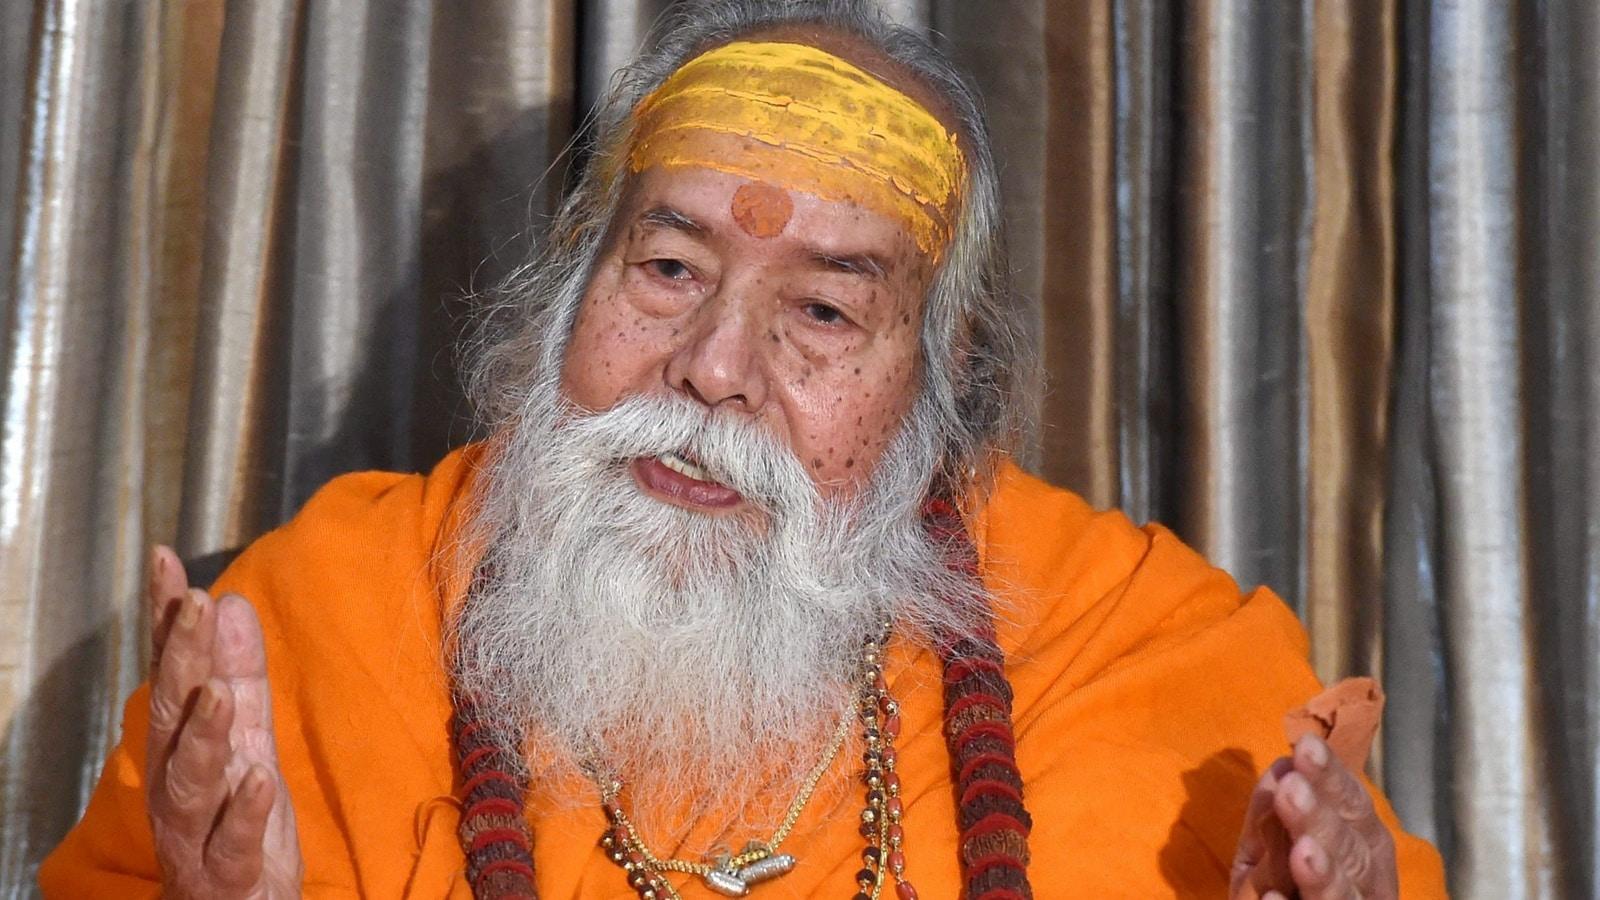 Swami Swaroopanand Saraswati passes away at 99_40.1